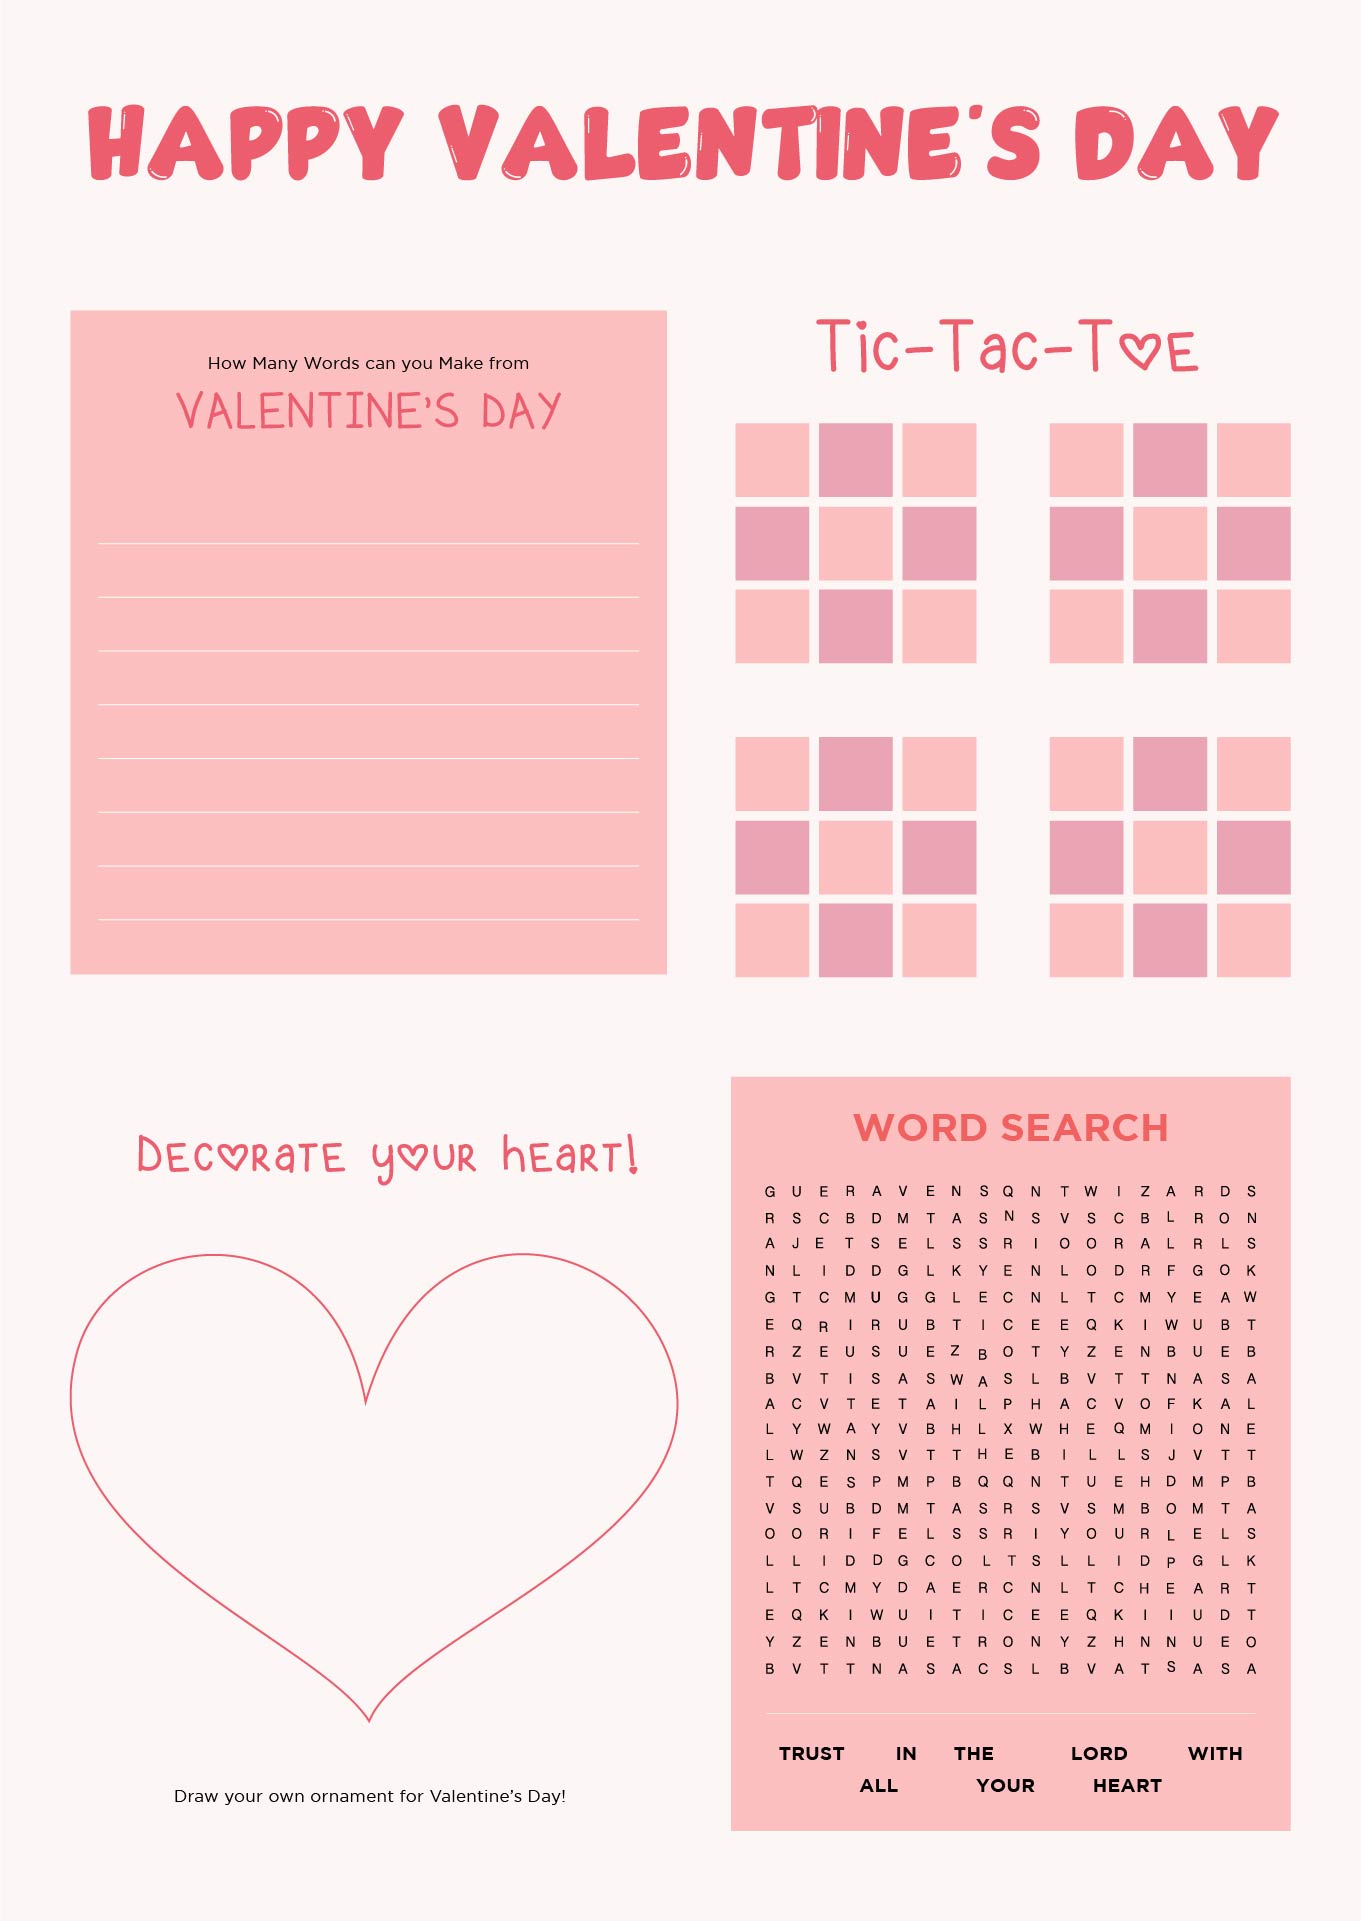 Valentines Day Printable Activities